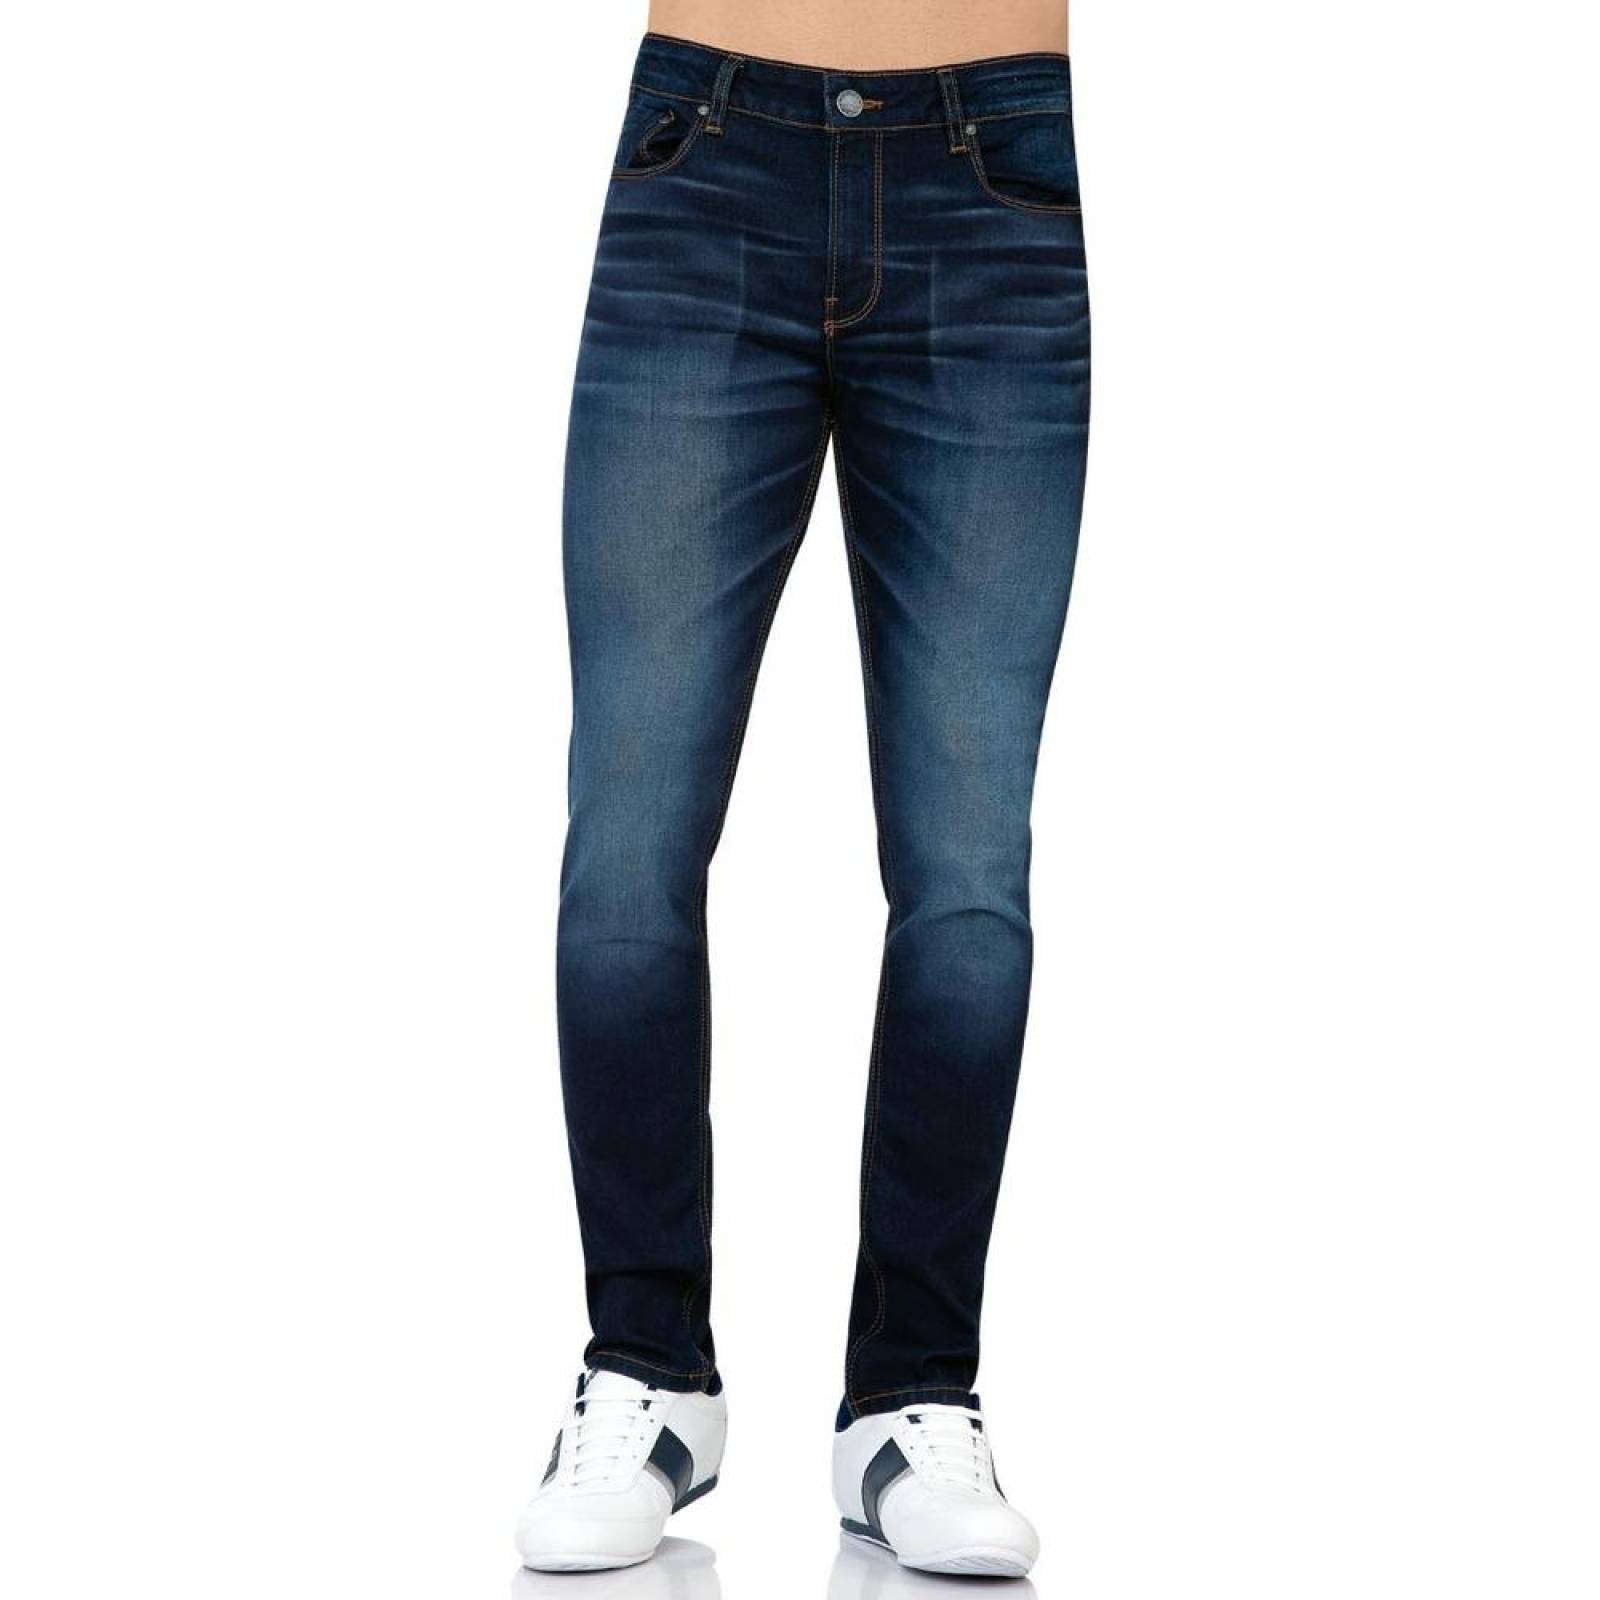 Jeans Moda Hombre Furor Indigo 62105316 Mezclilla Stretch 